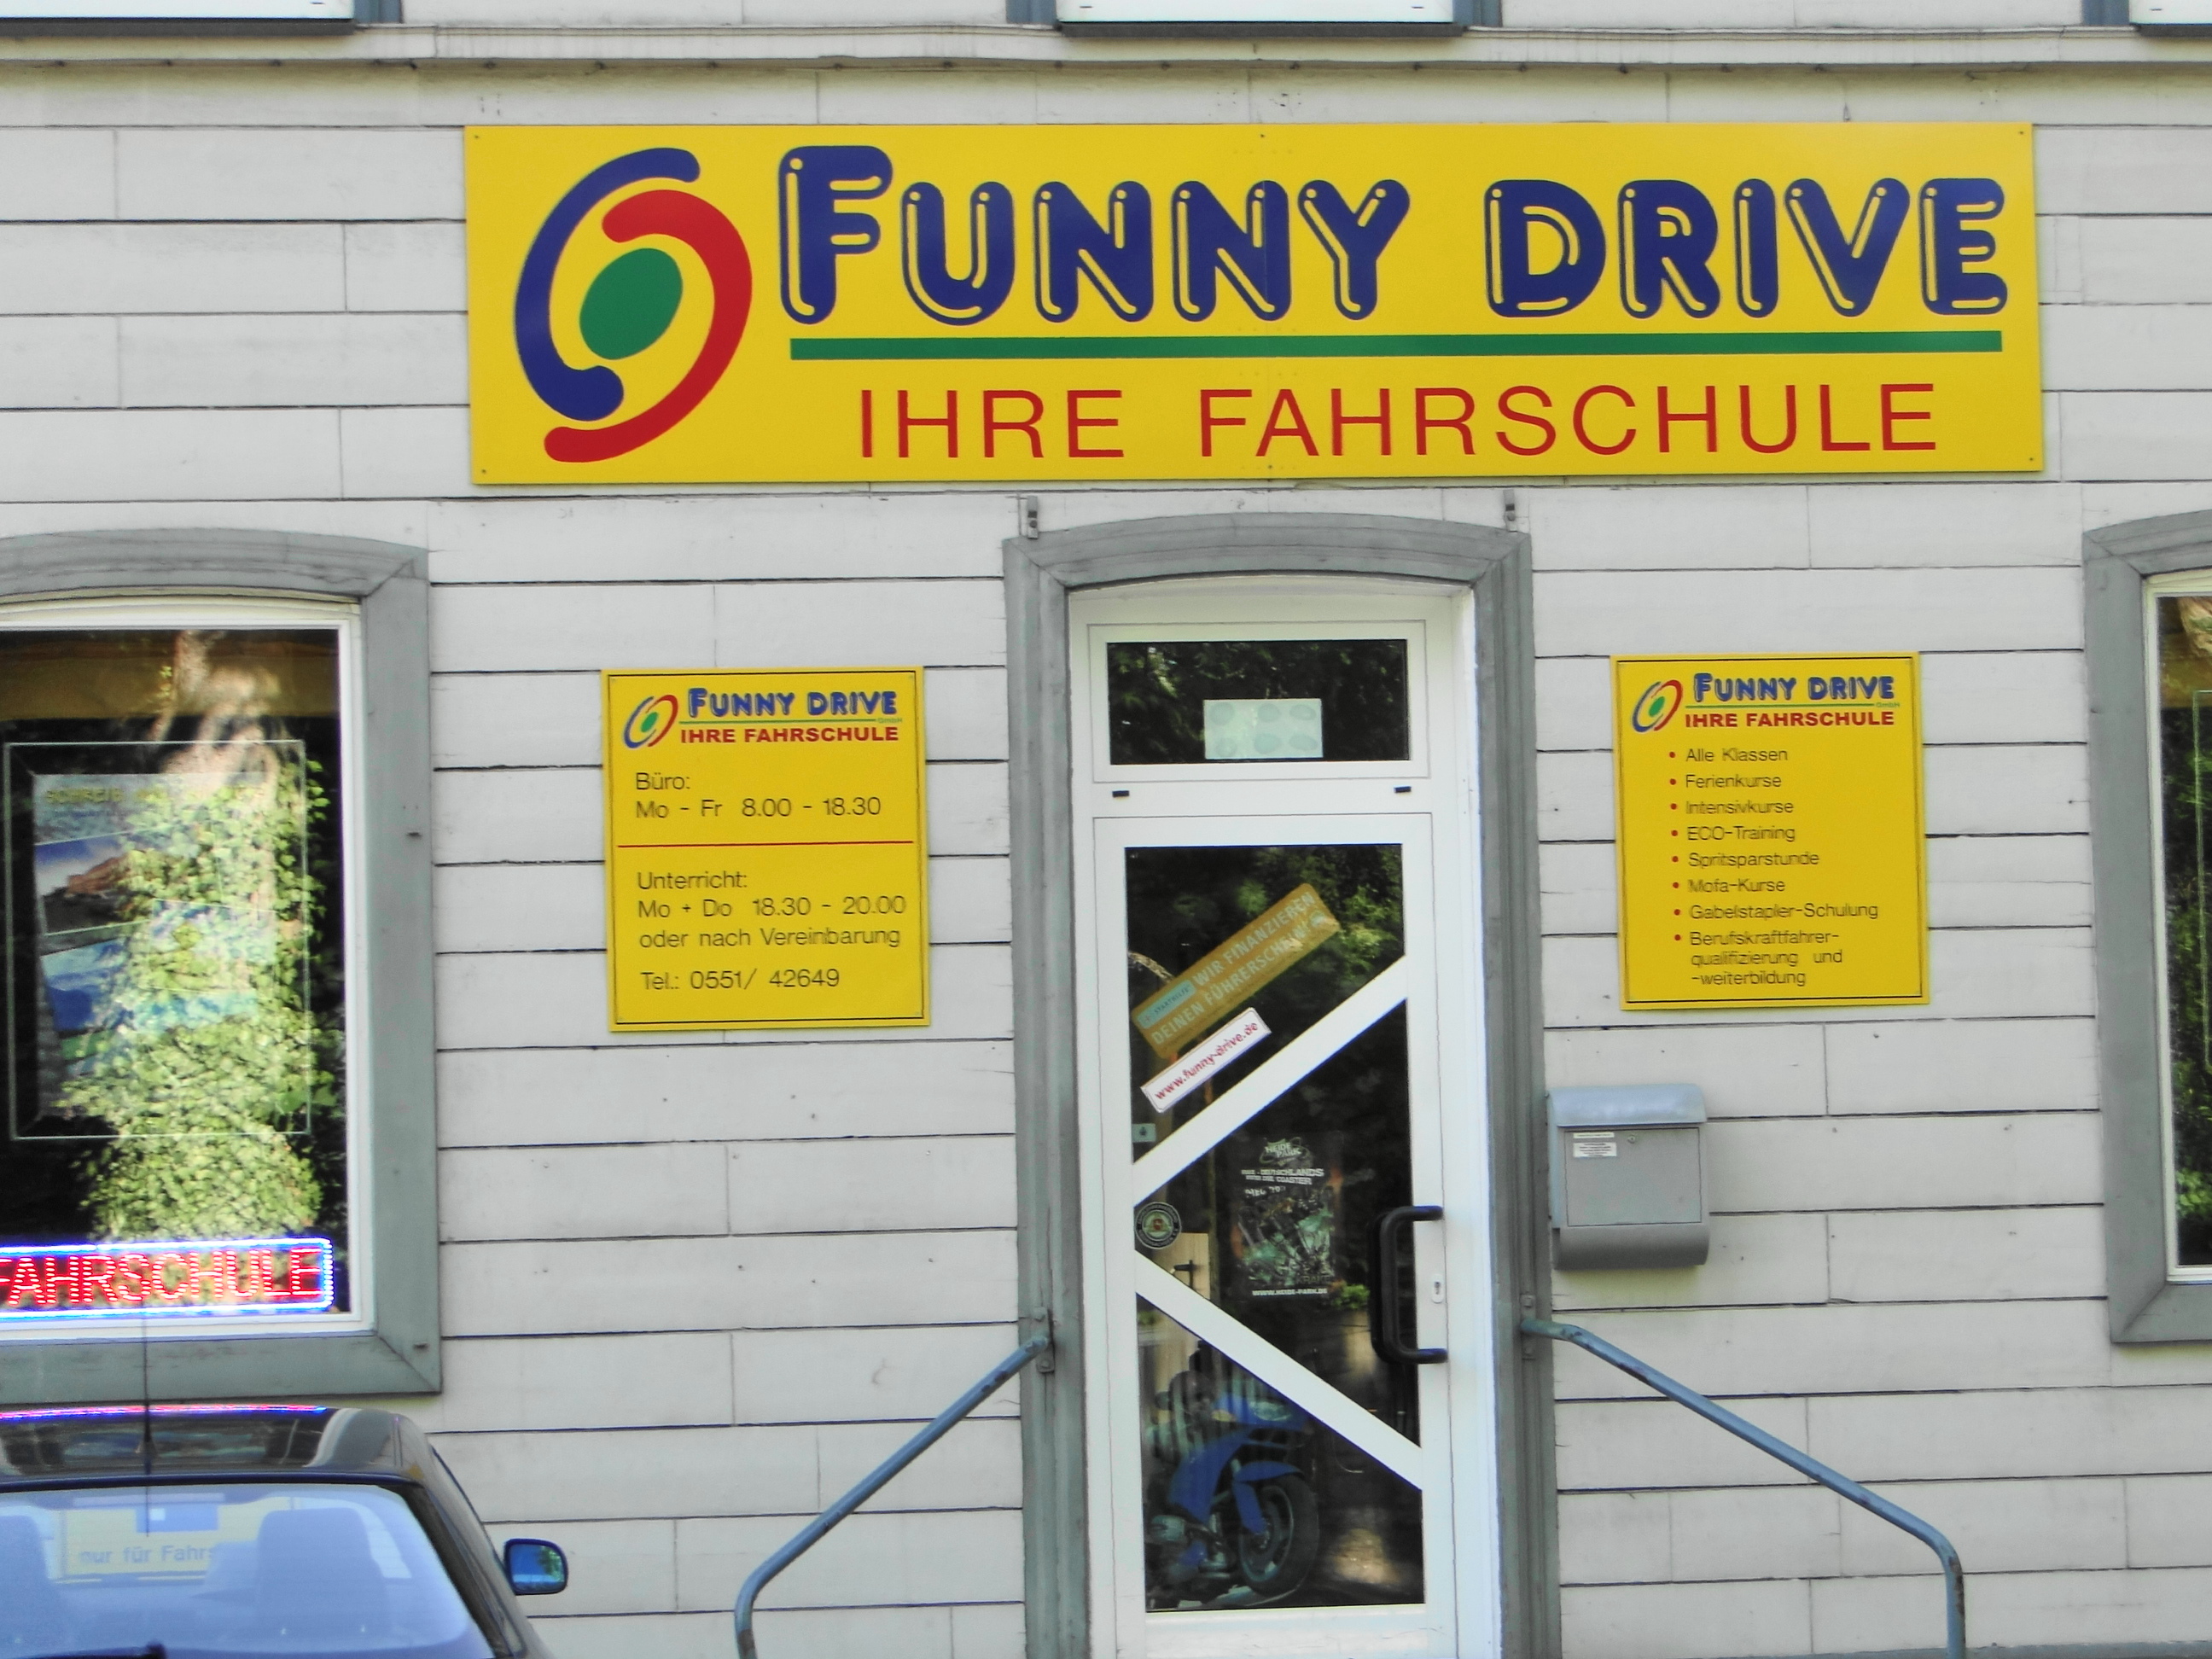 Fahrschule Funny Drive GmbH in der Reinhäuser Landstr. 32, Eingang